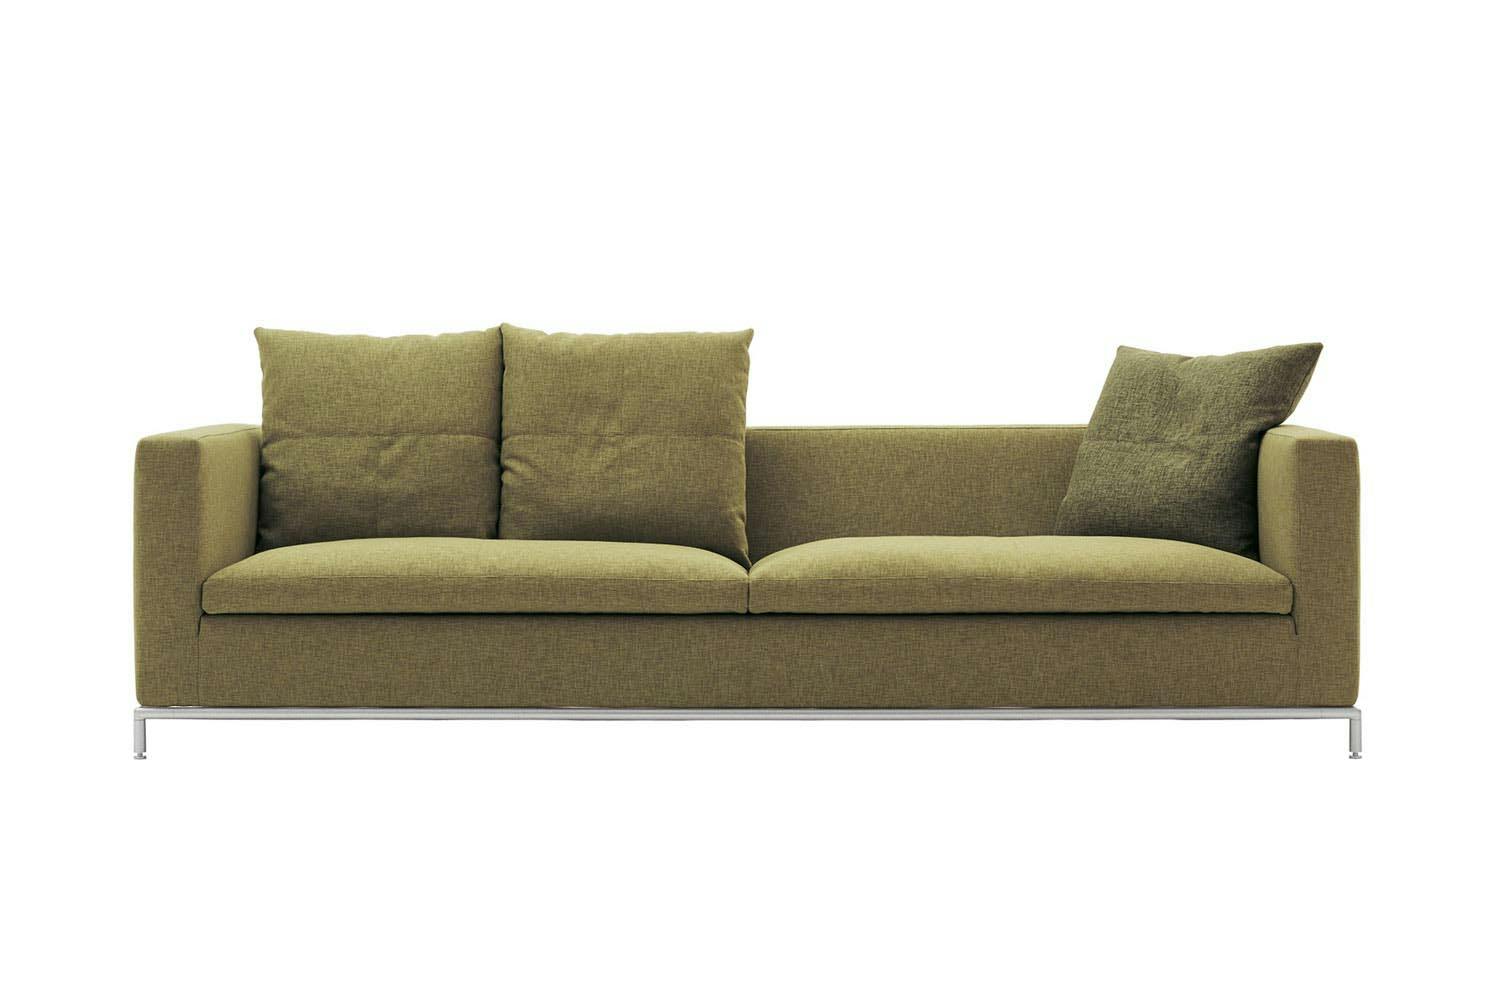 Image result for b&b italia sofa